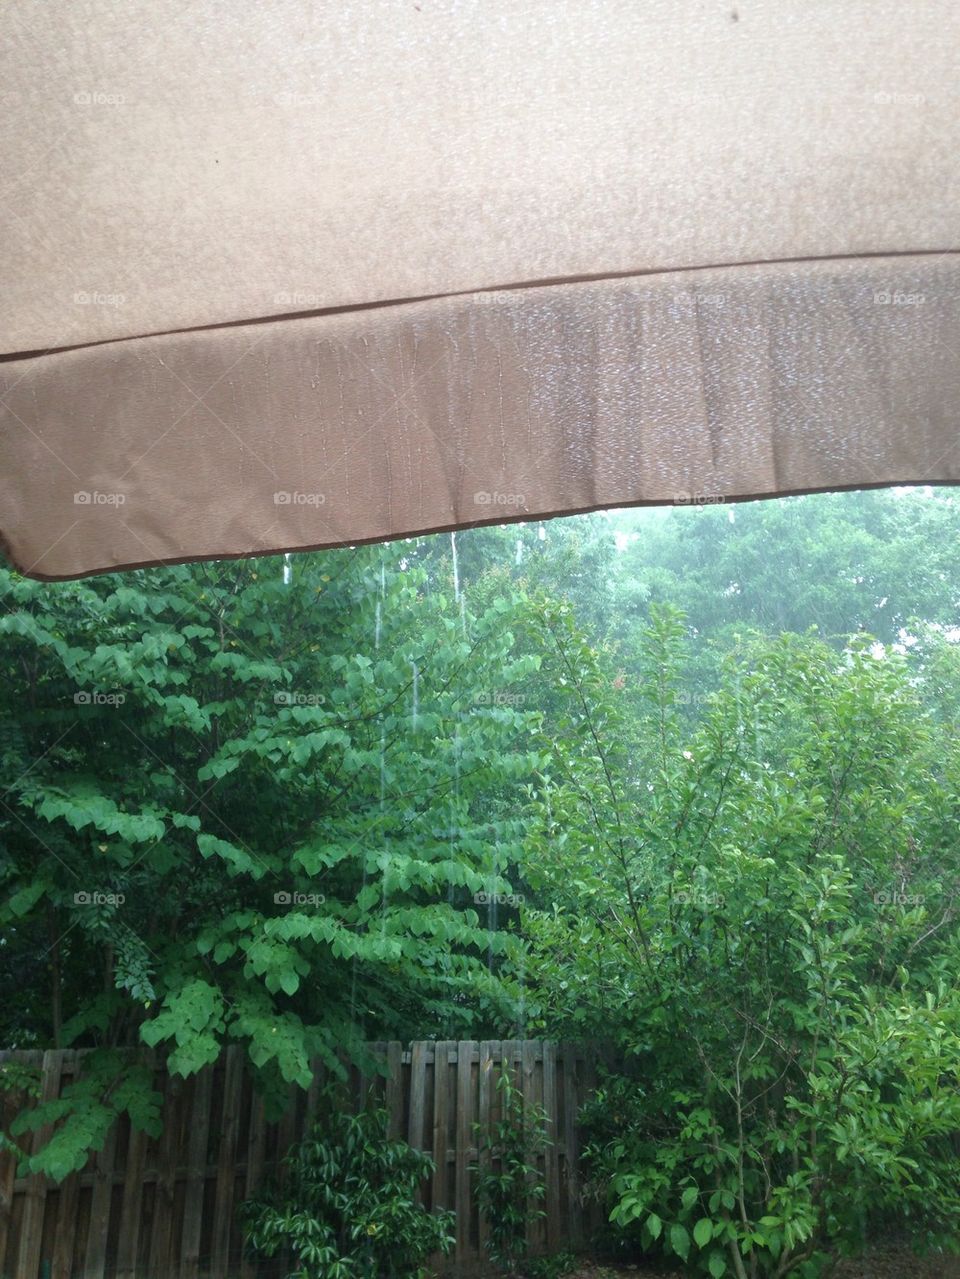 Summer rainstorm in my backyard